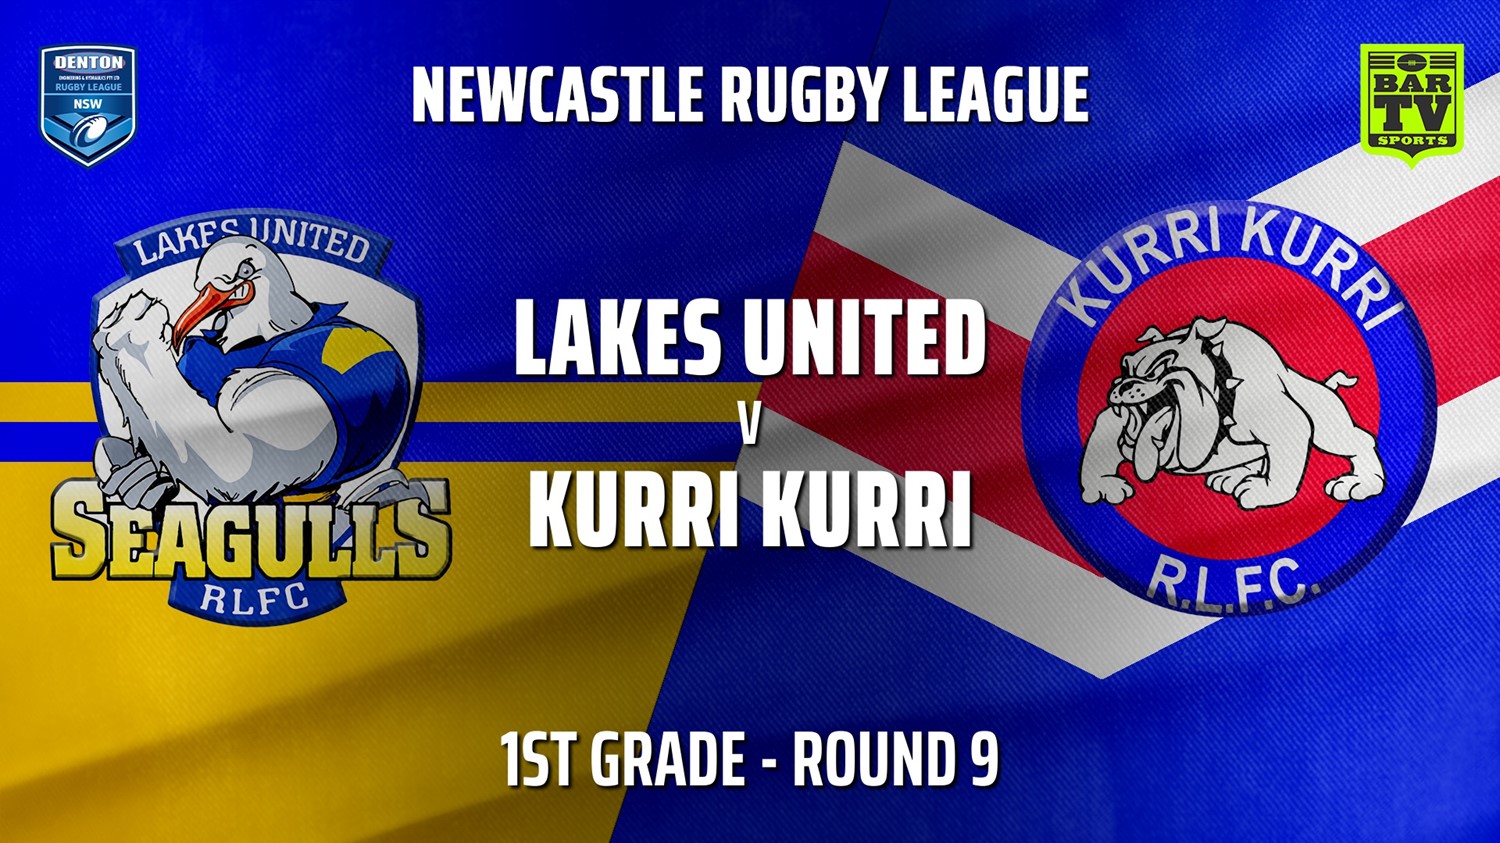 210530-Newcastle Rugby League Round 9 - 1st Grade - Lakes United v Kurri Kurri Bulldogs Slate Image